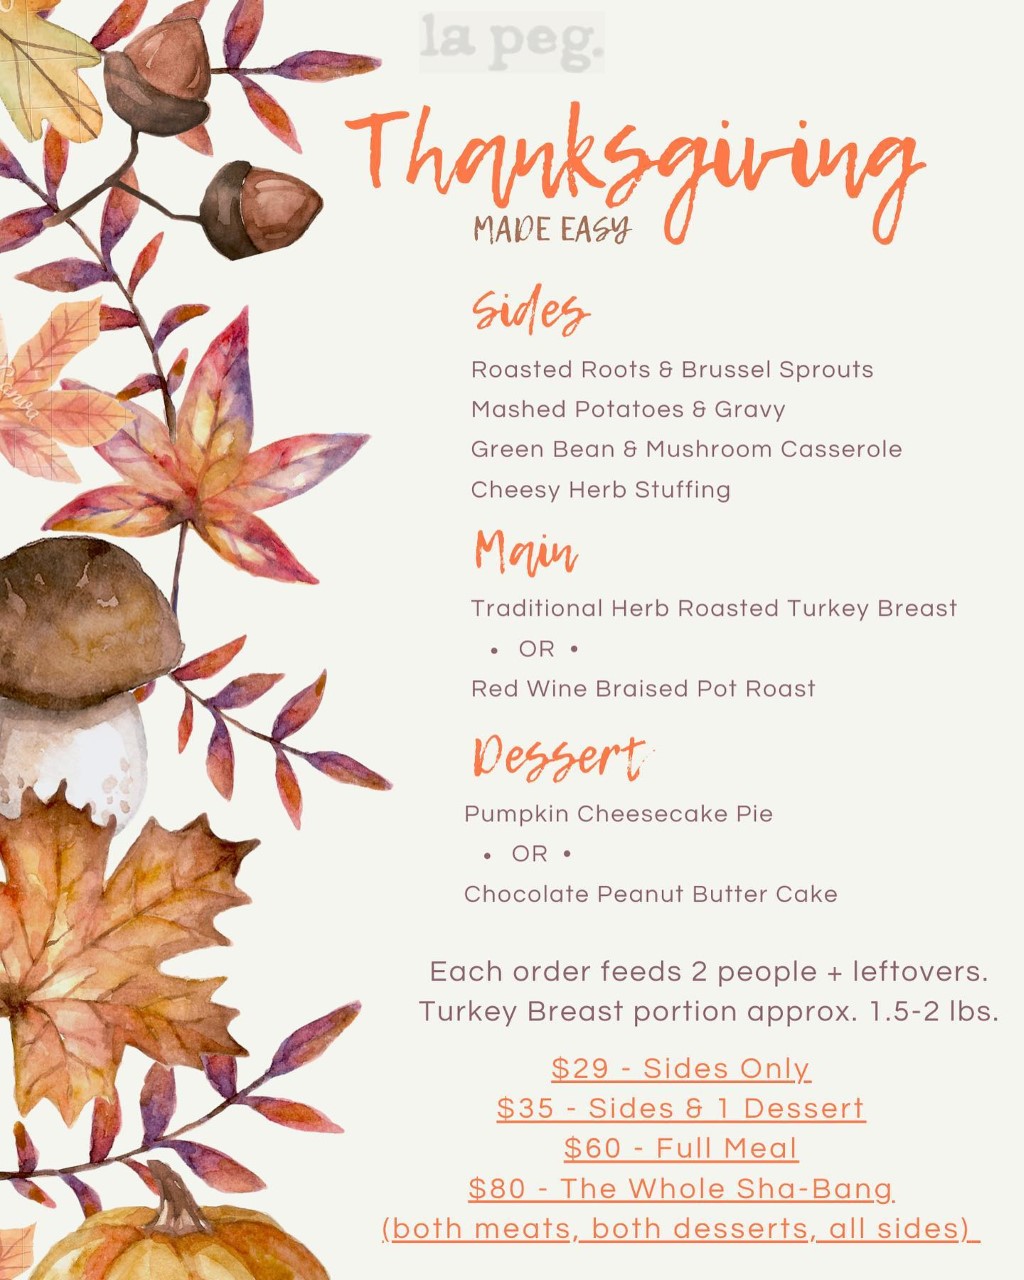 Thanksgiving menu in text